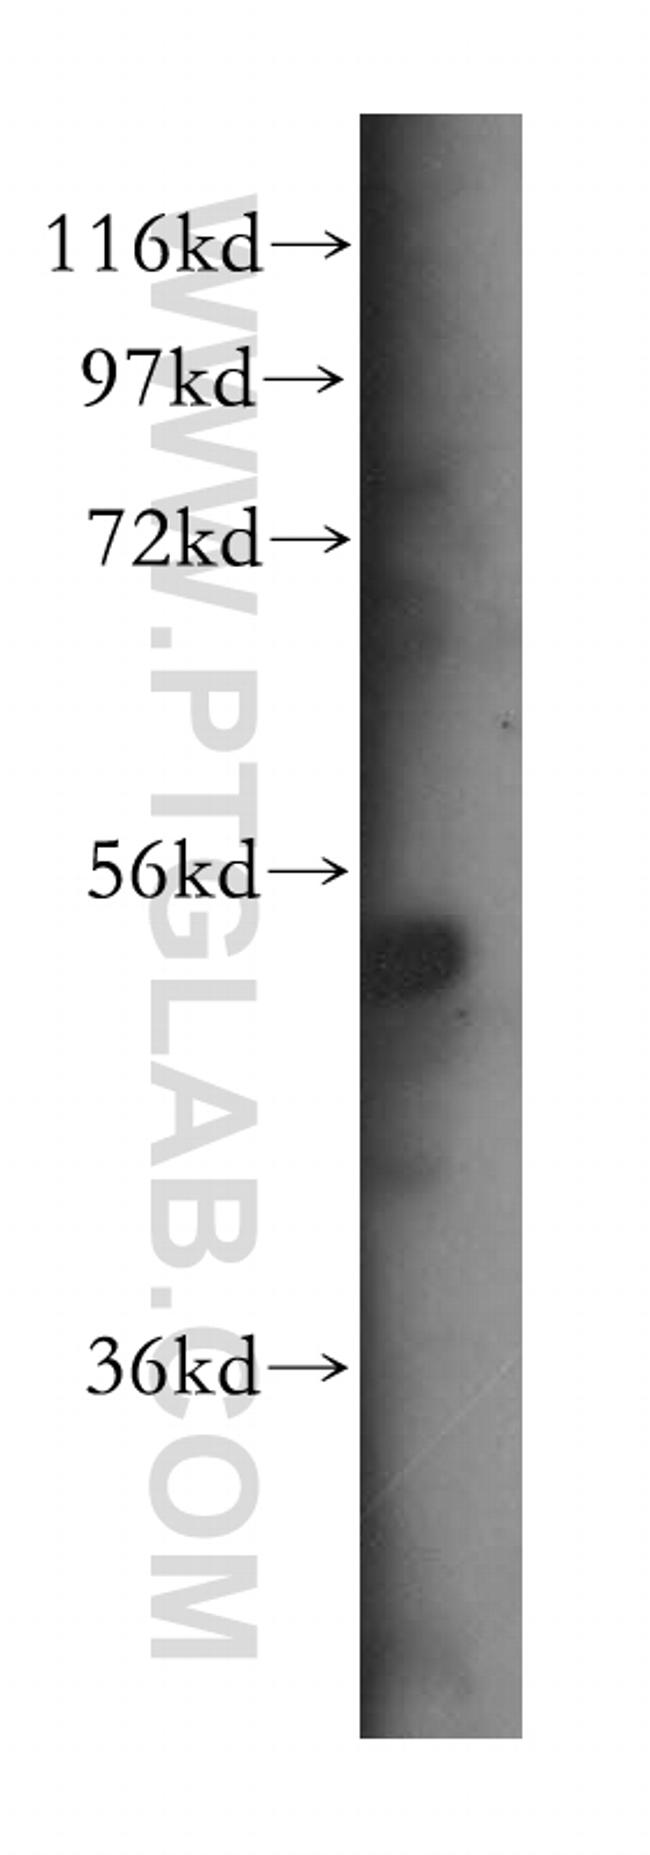 SDCCAG10 Antibody in Western Blot (WB)